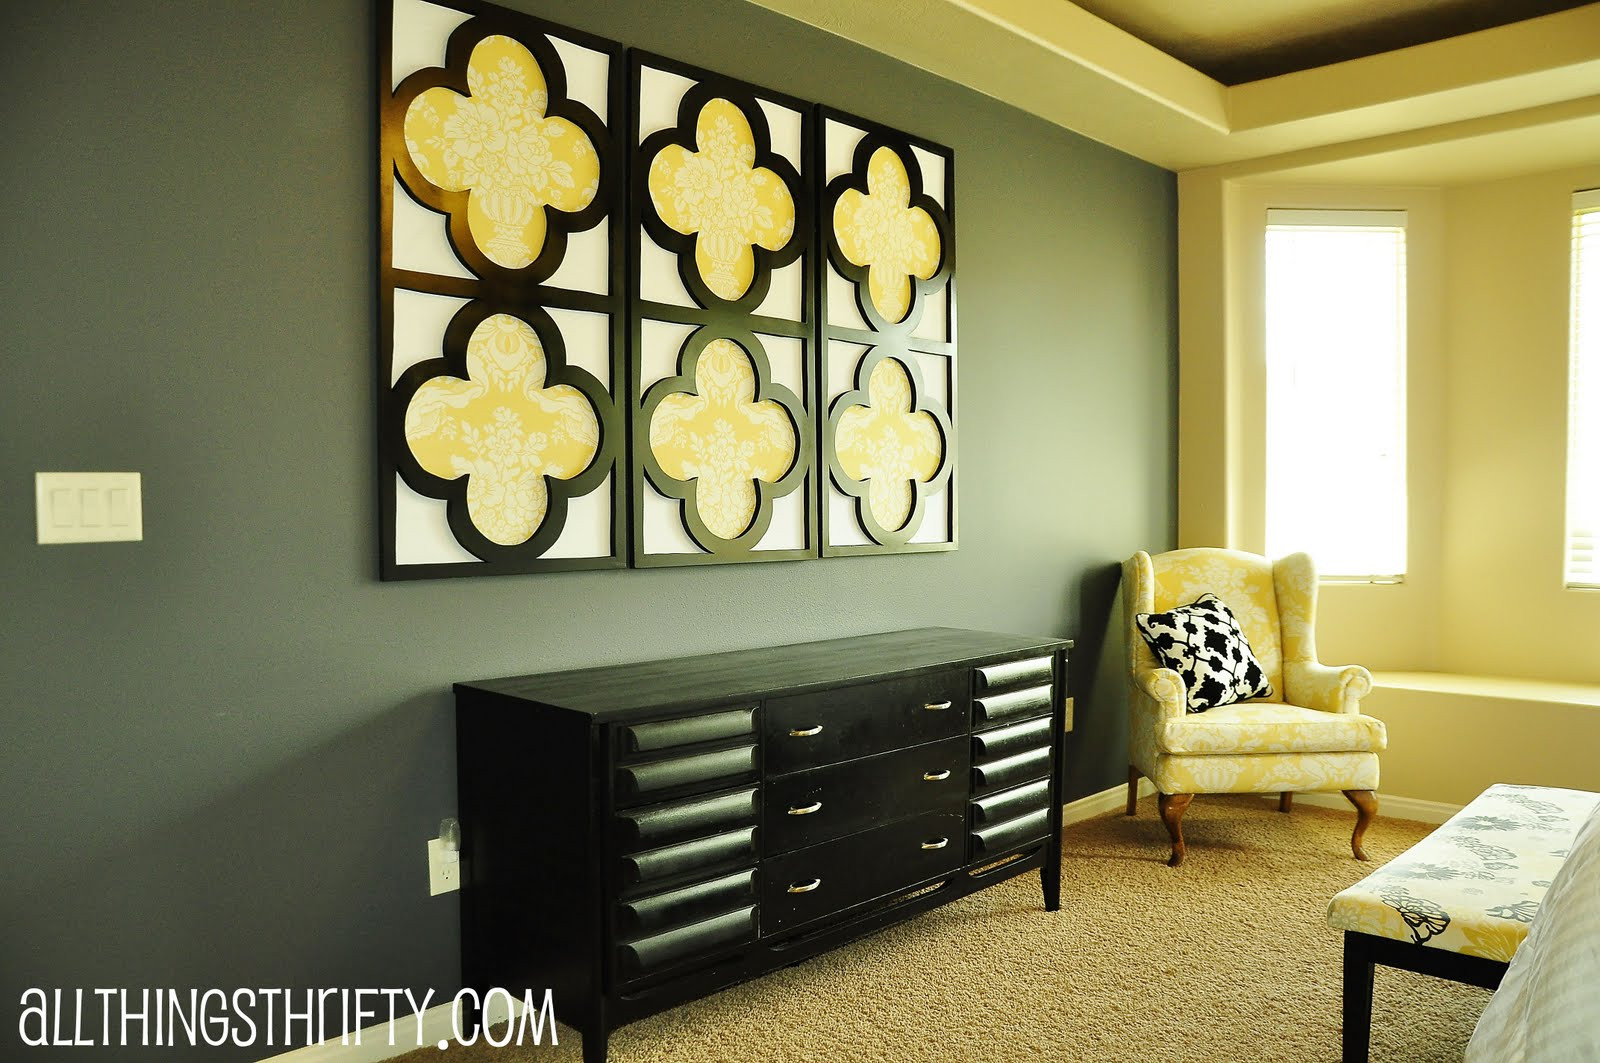 Best ideas about DIY Wall Art Decor
. Save or Pin Tutorial Quatrefoil DIY Decorative Wall Art Now.